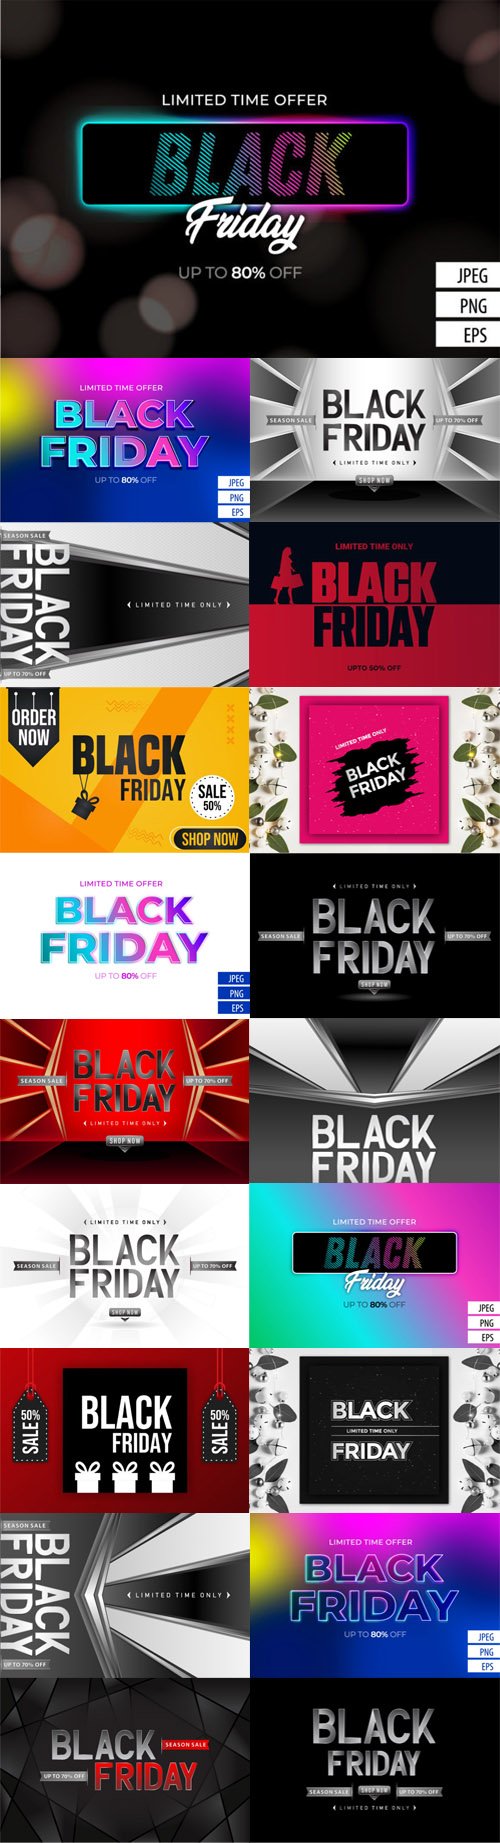 Black Friday Sales Vector Design Templates Collection